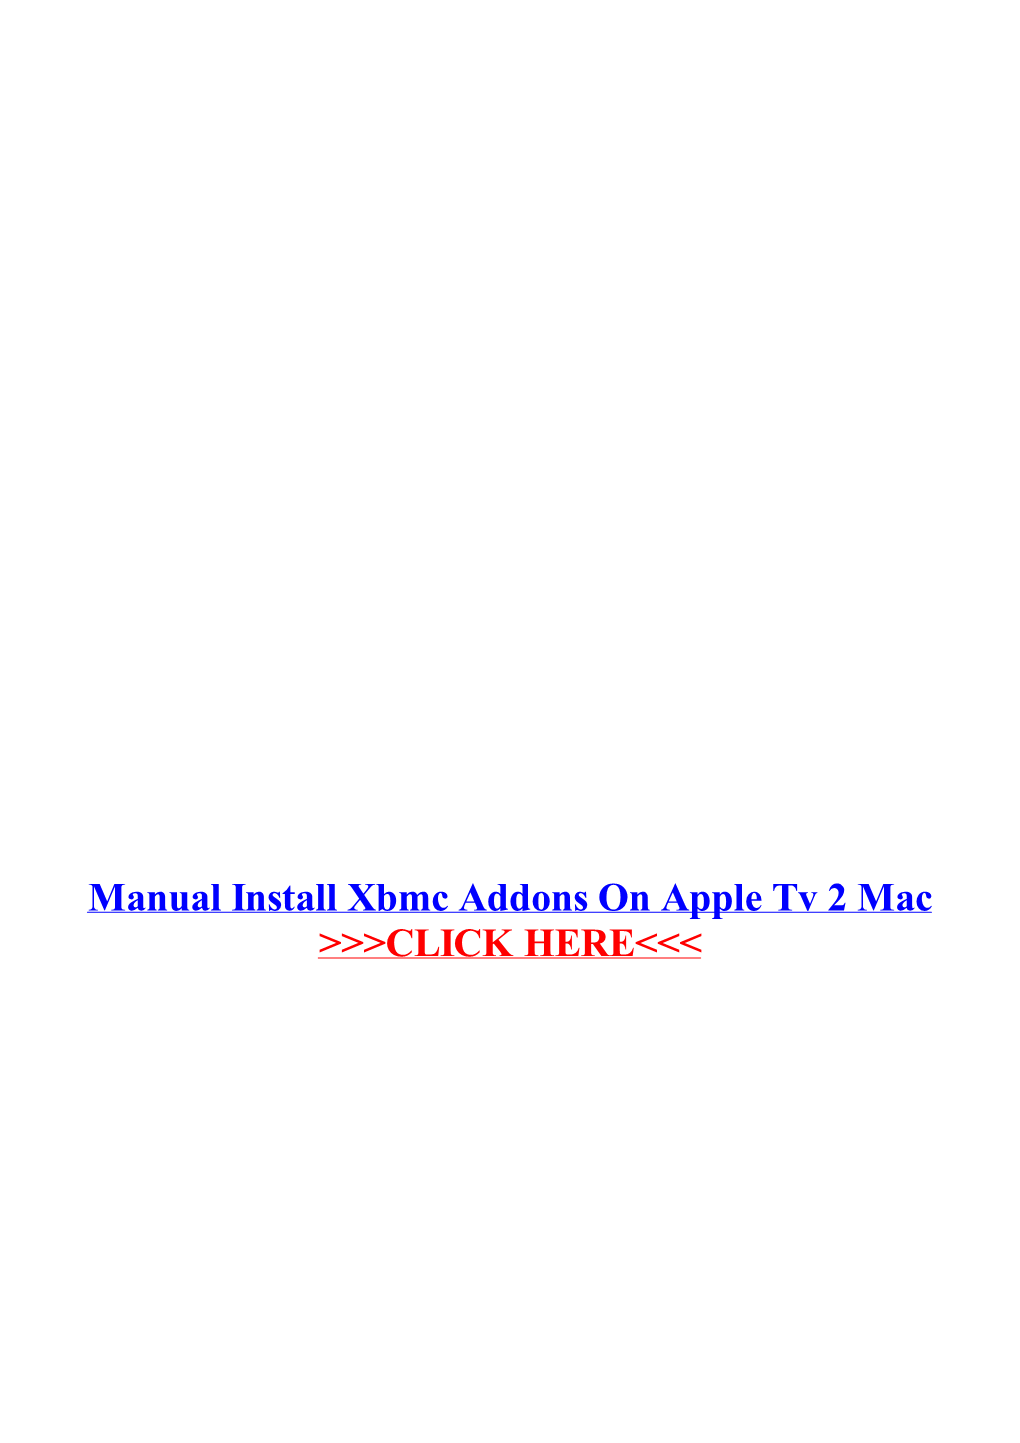 Manual Install Xbmc Addons on Apple Tv 2 Mac V14.2 "Helix" Will Be the Last Version of Kodi to Run on the Apple TV 2